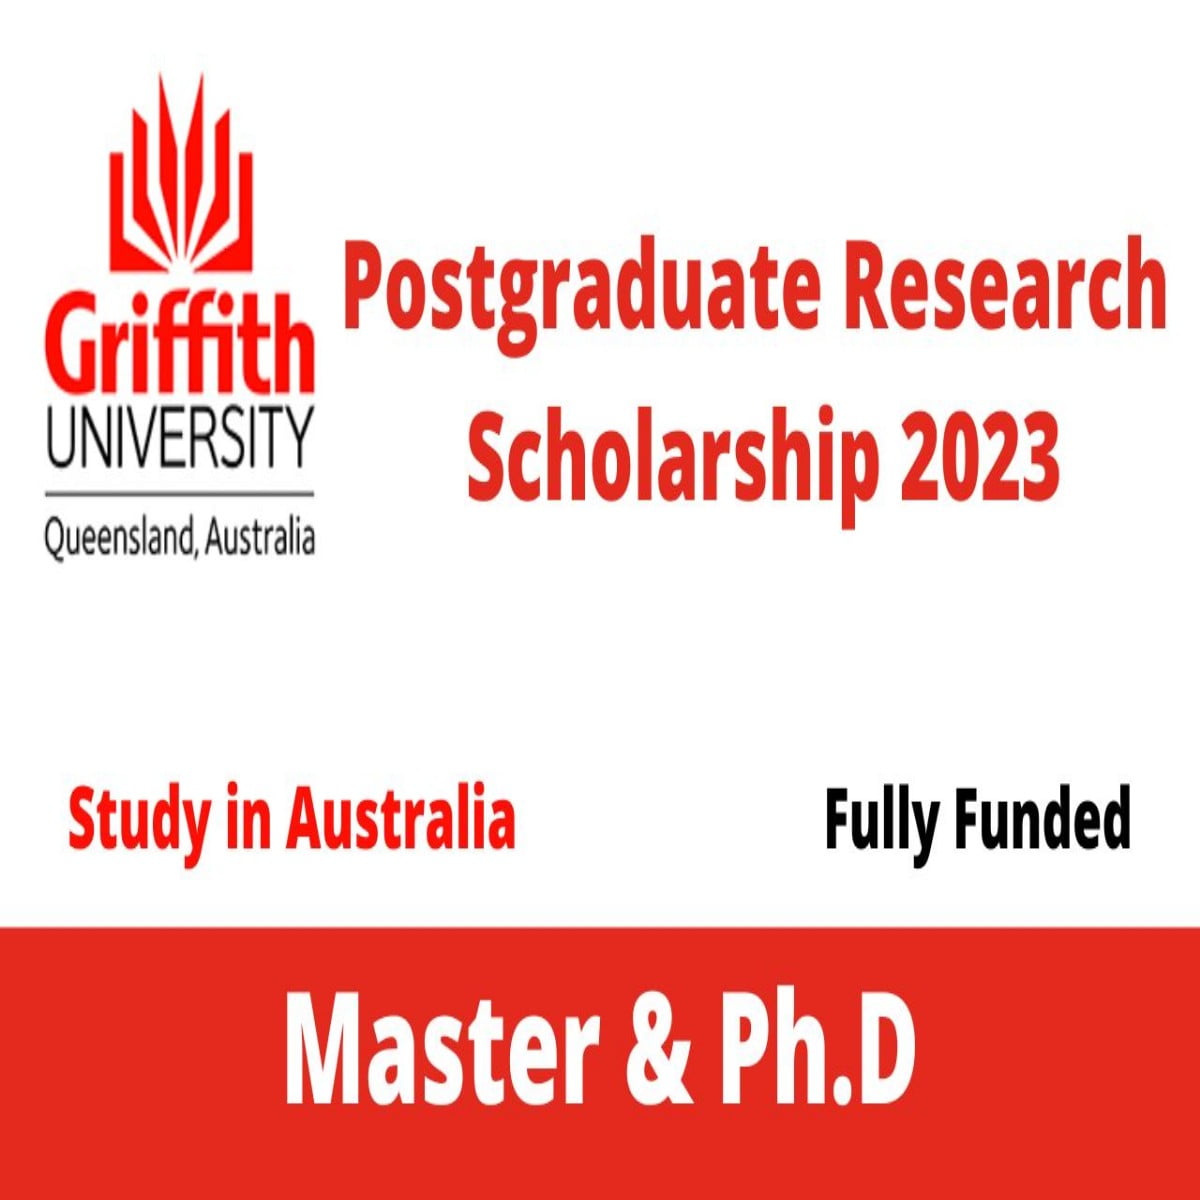 International Postgraduate Research Scholarship 2023 at Griffith University in Australia